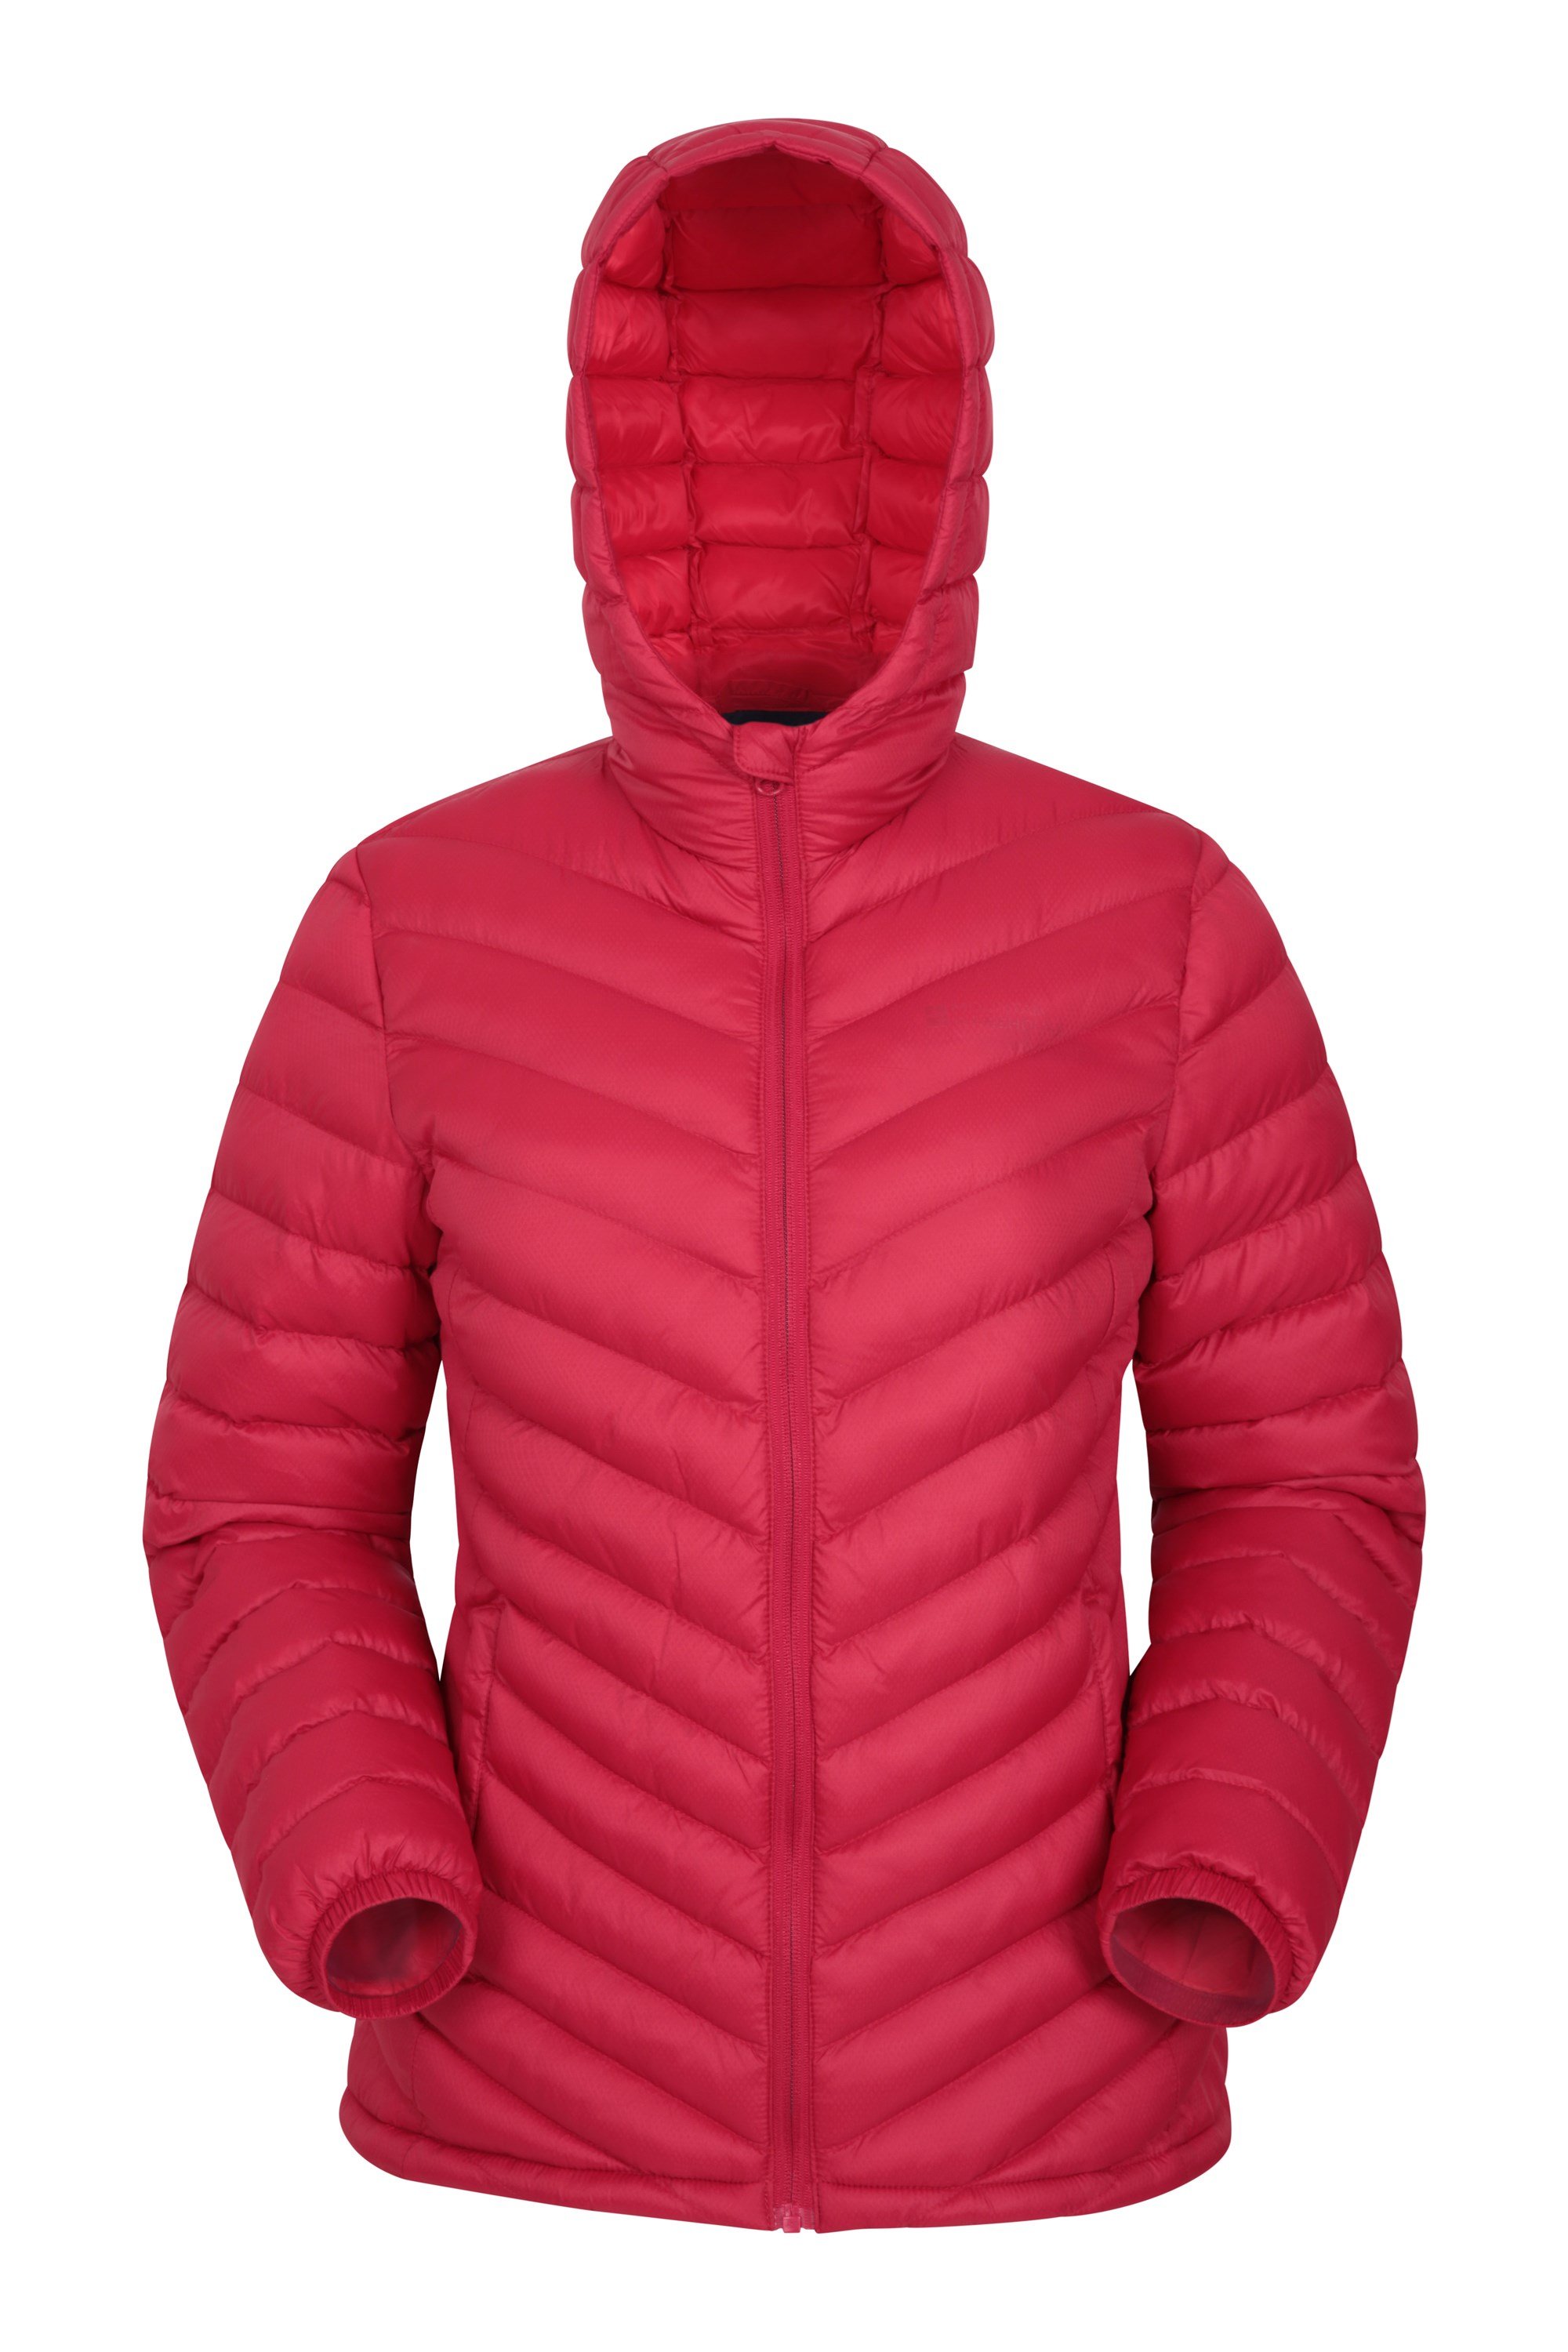 Seasons Womens Padded Jacket - Red